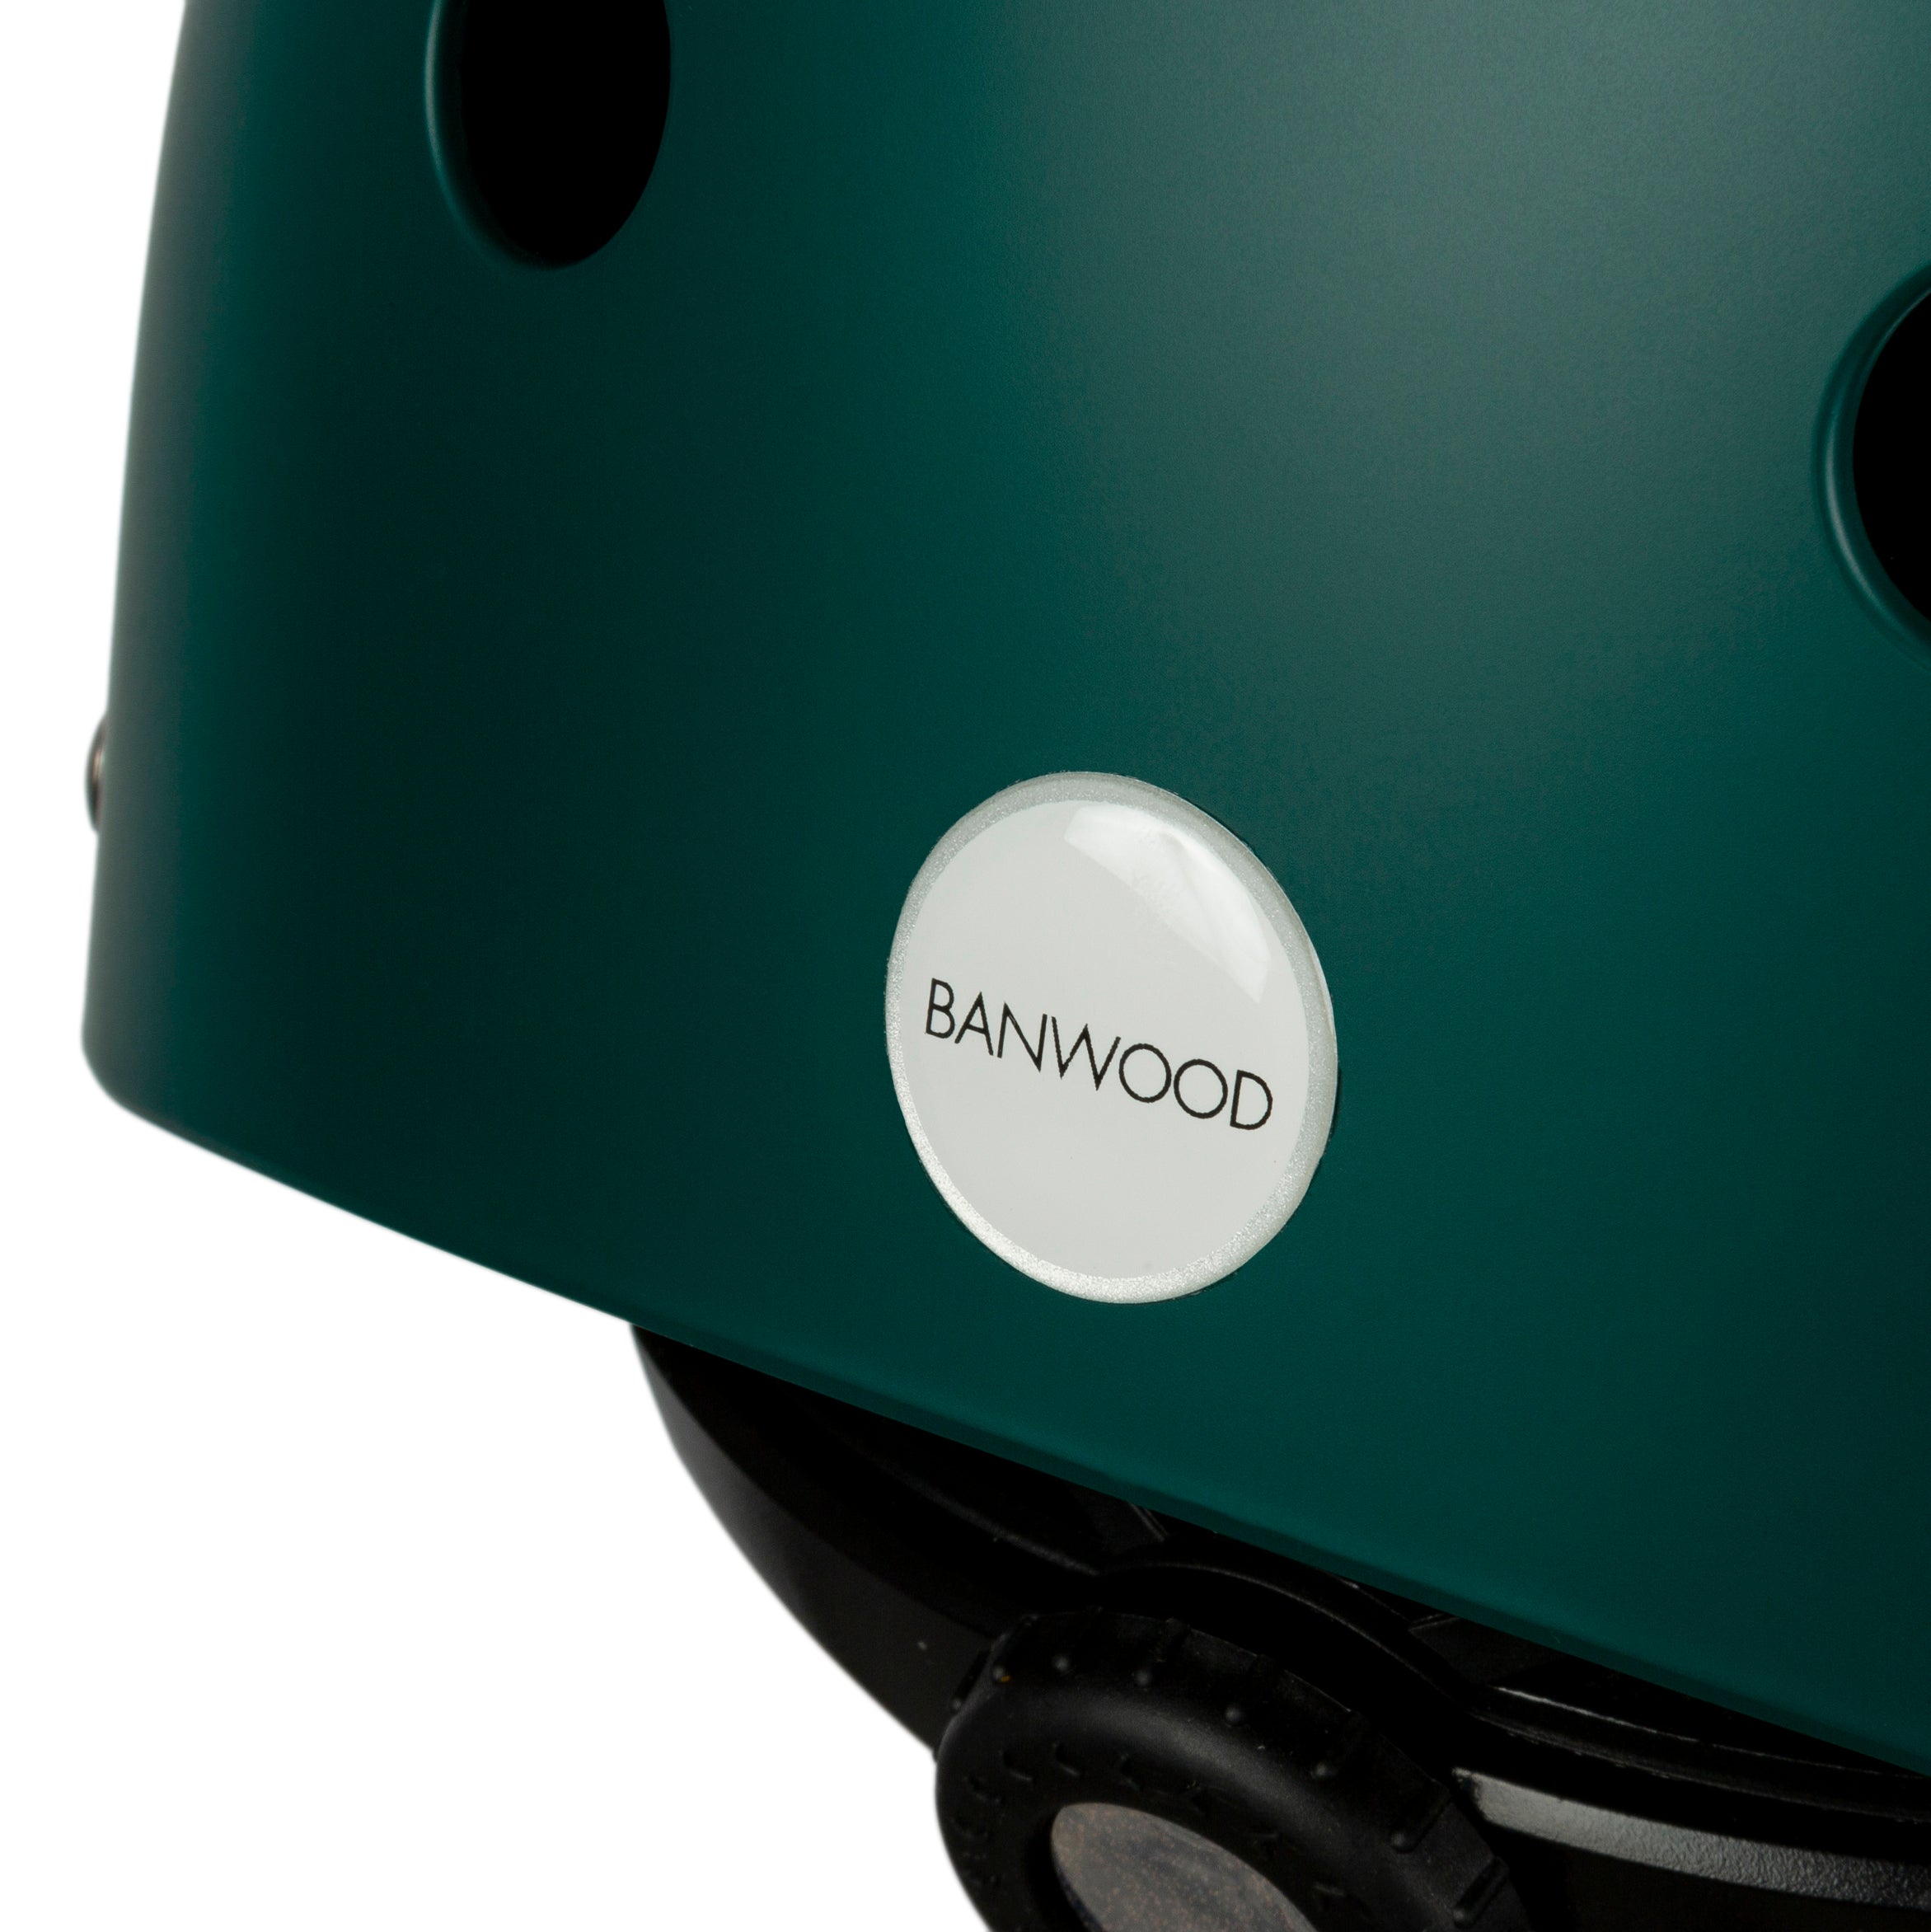 Banwood Classic Helmet, Dark Green XS